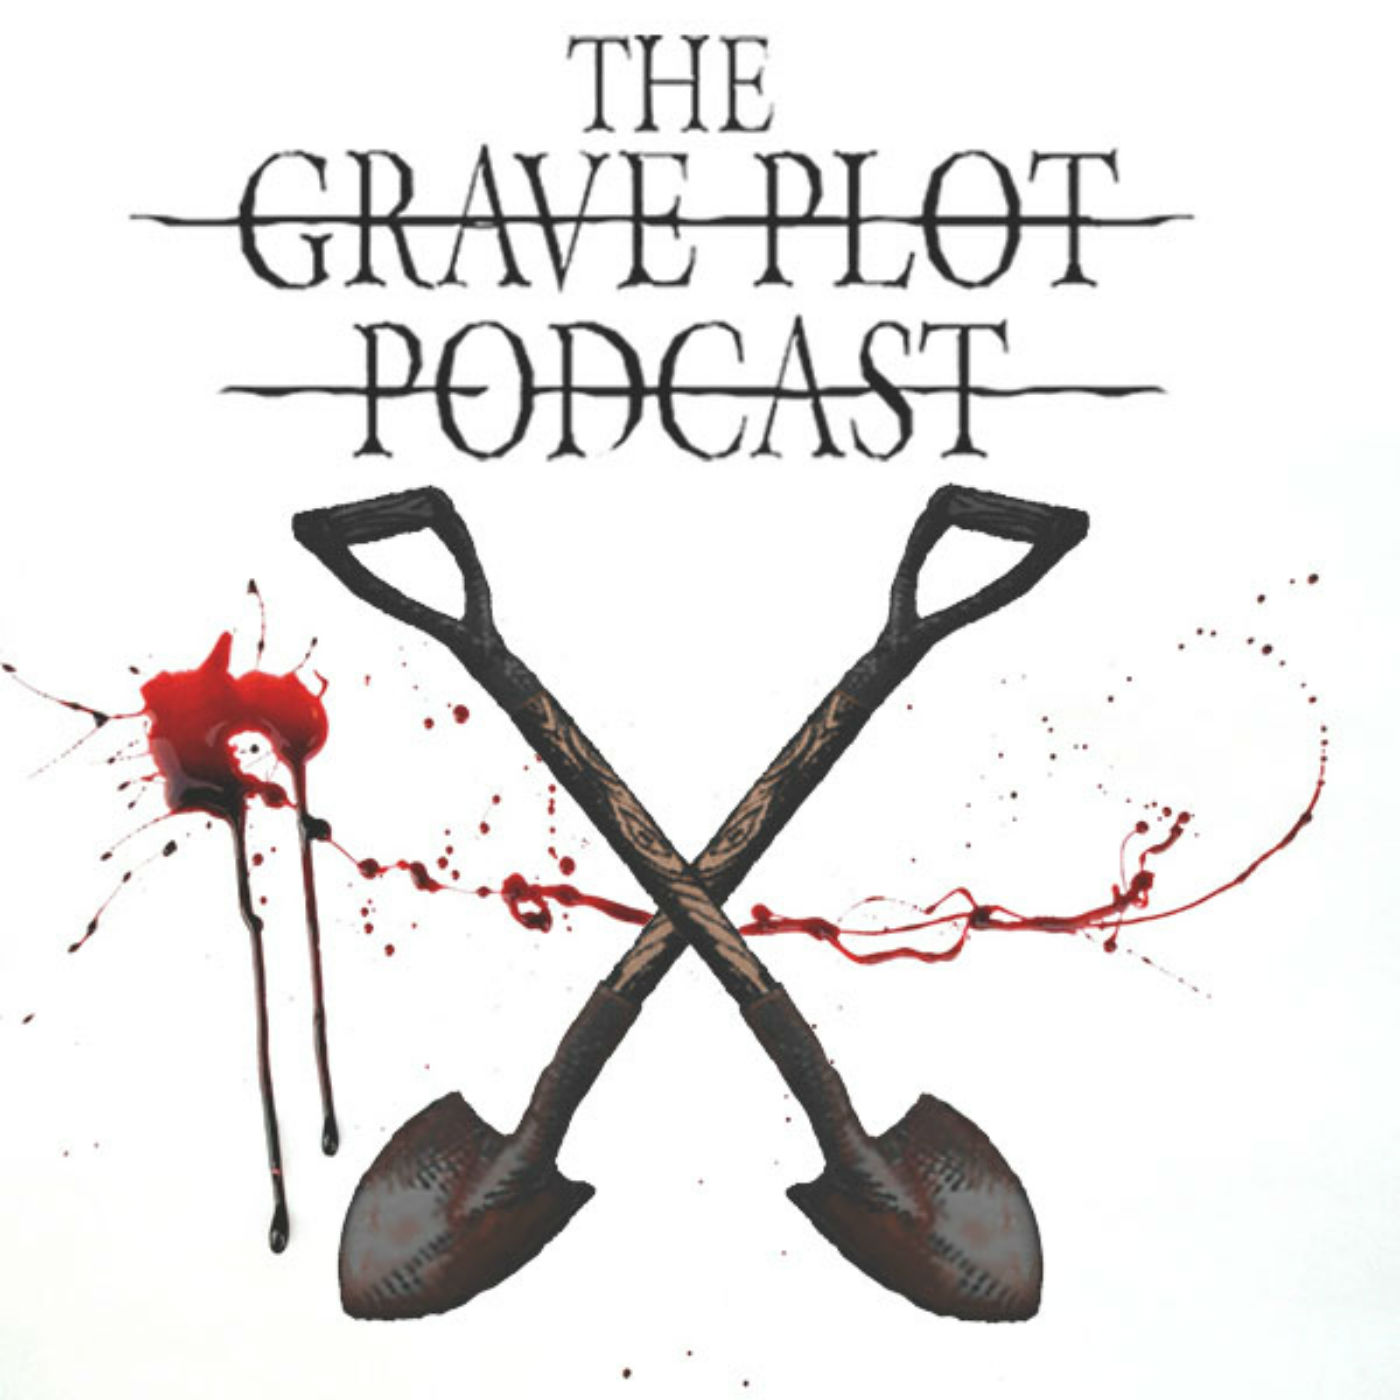 The Grave Plot Podcast